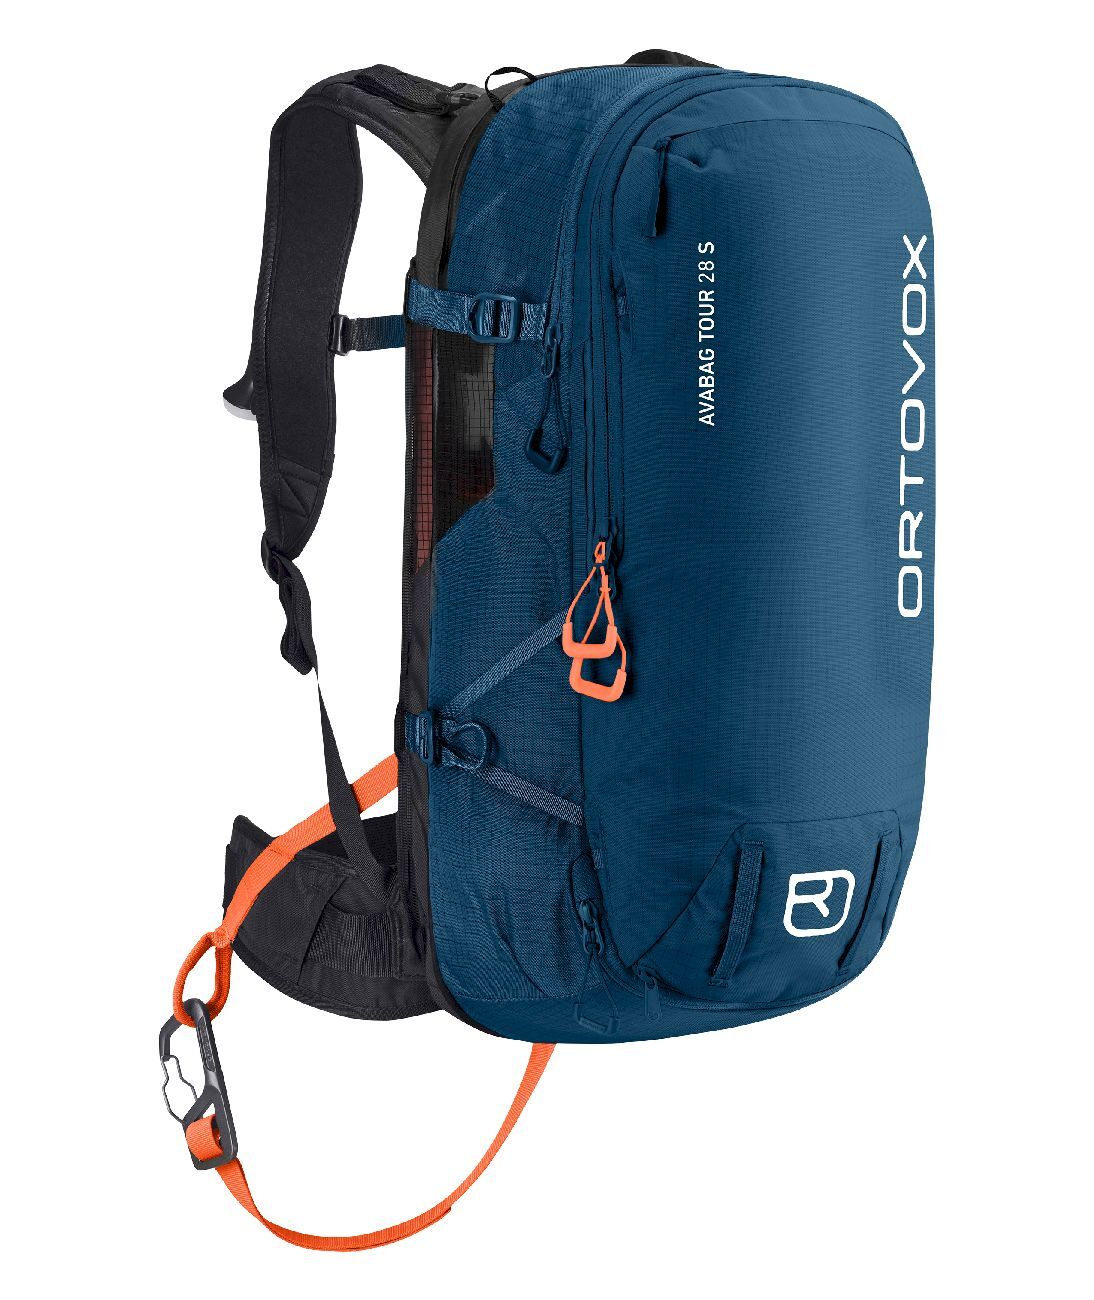 Ortovox Avabag Litric Tour 28S - Avalanche airbag backpack